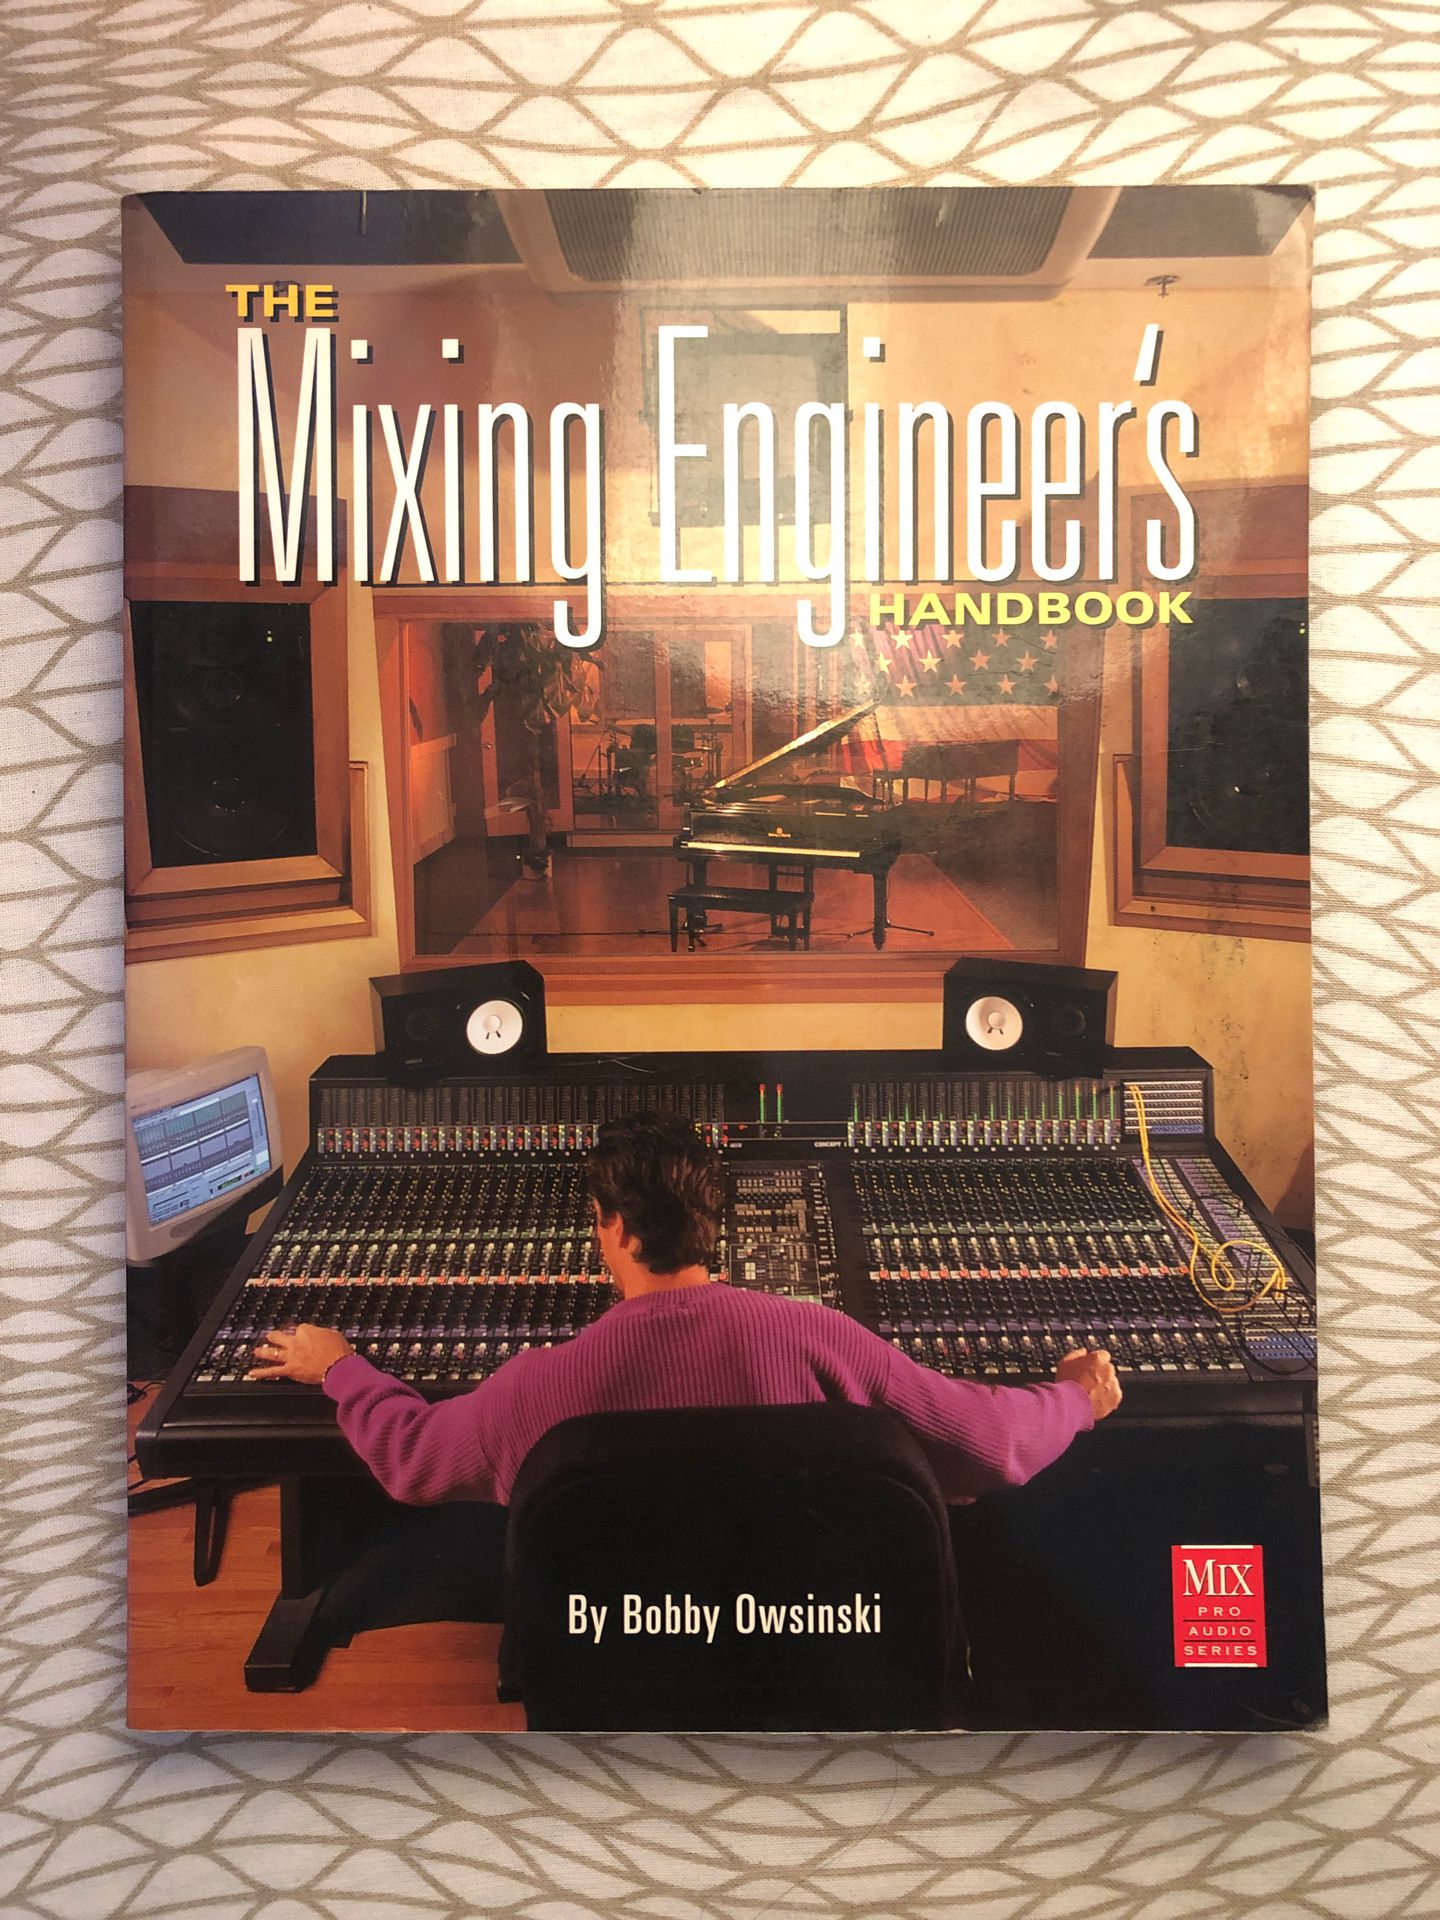 The Mixing Engineer’s Handbook by Bobby Owsinski